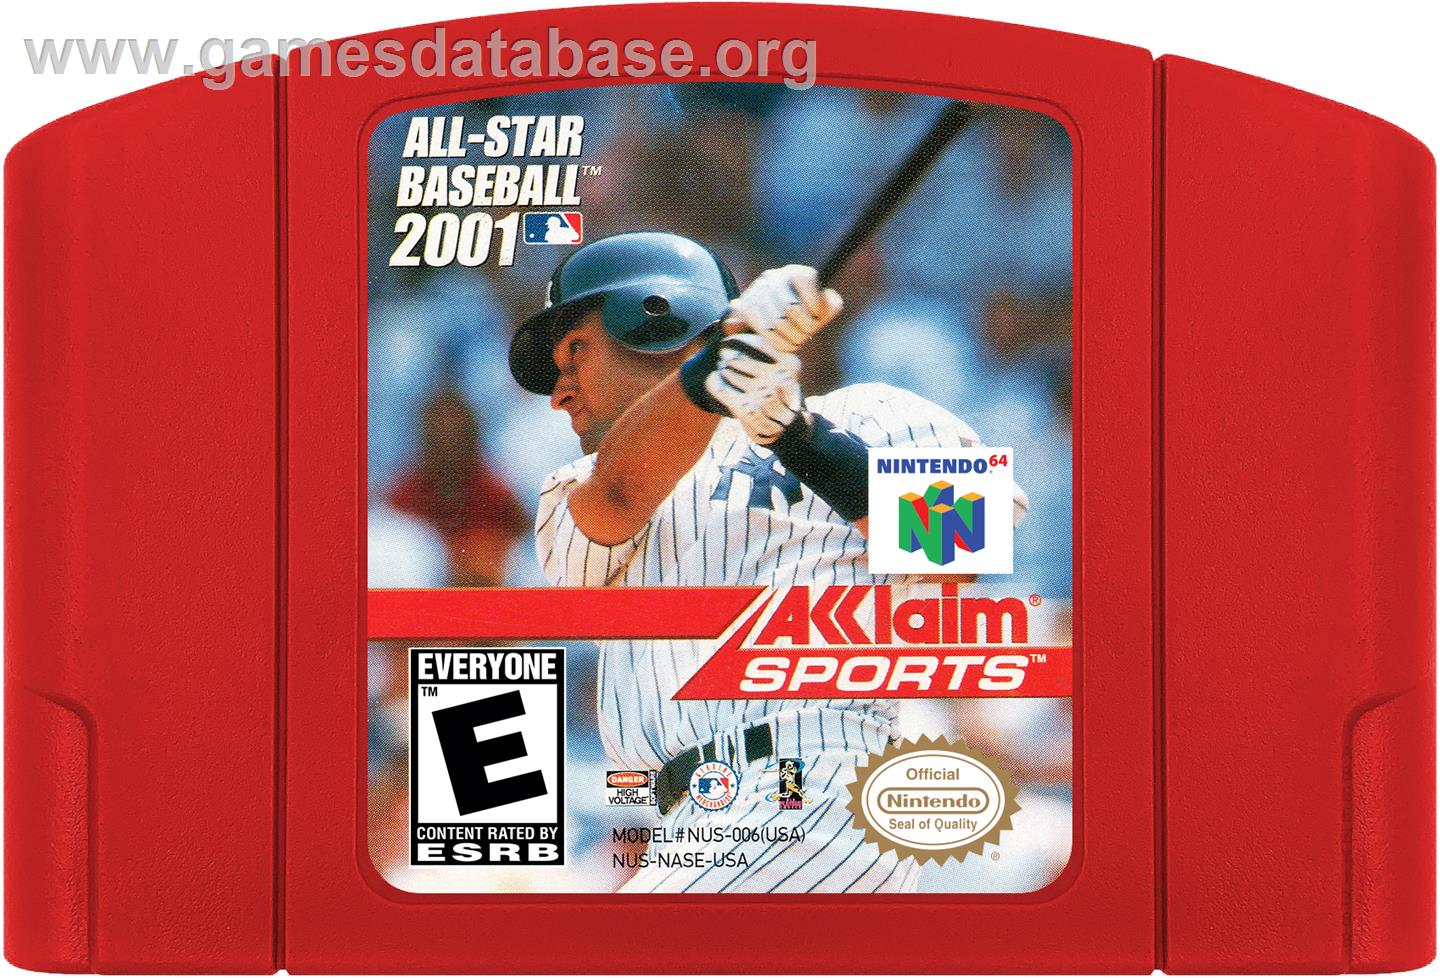 All-Star Baseball 2001 - Nintendo N64 - Artwork - Cartridge